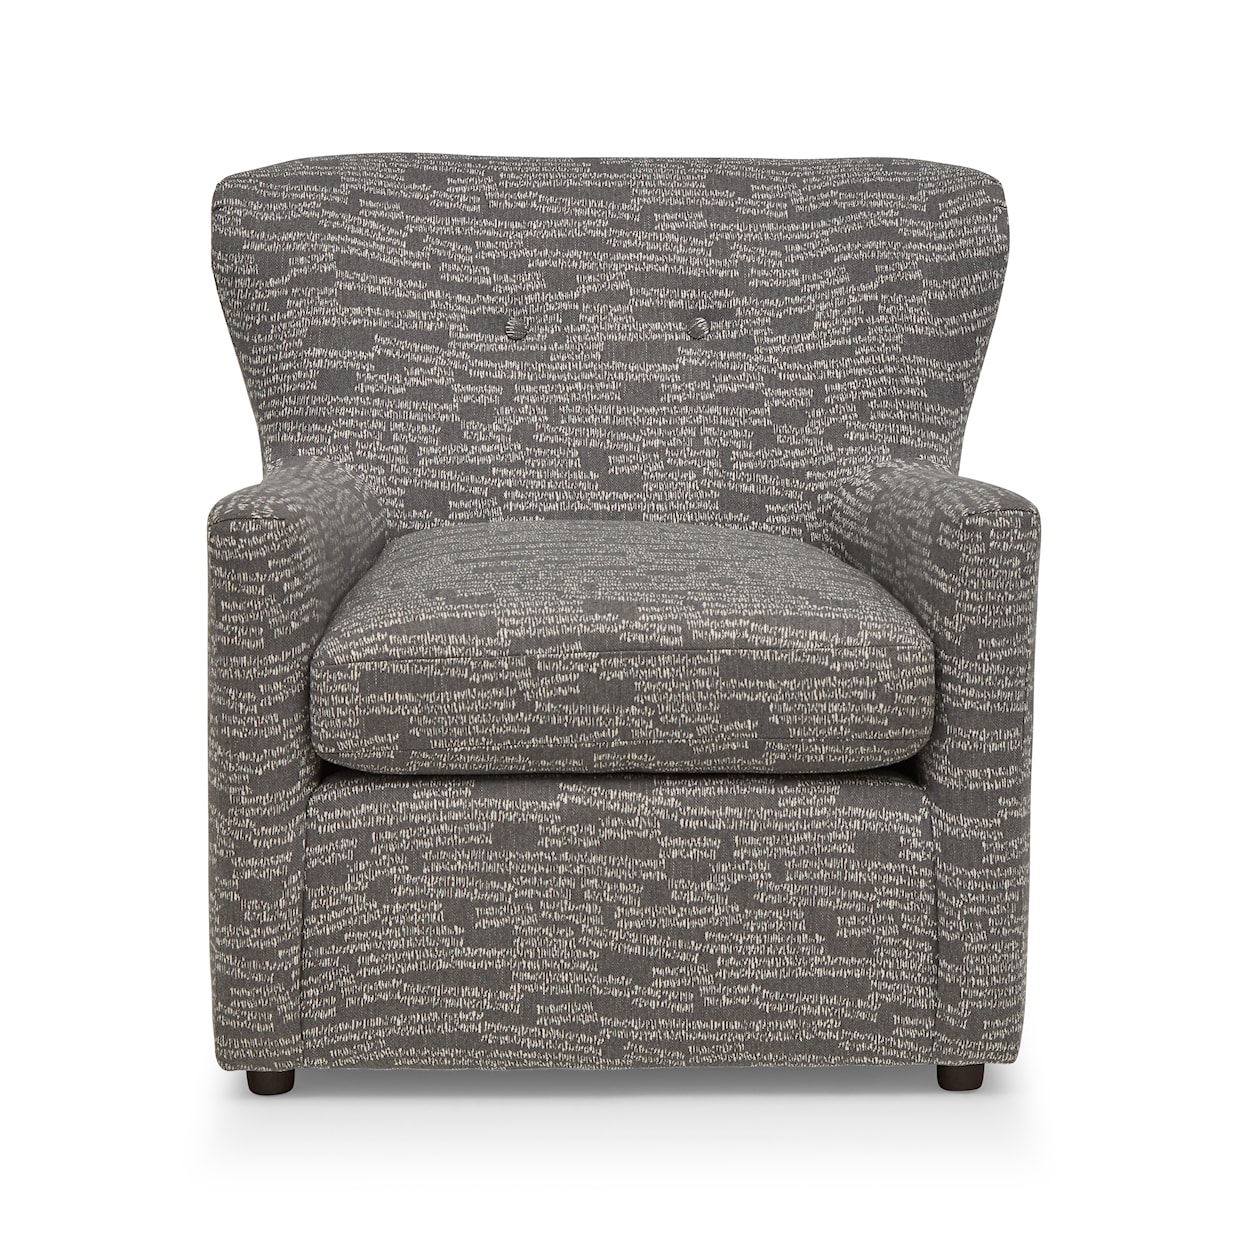 Bravo Furniture Casimere Chair